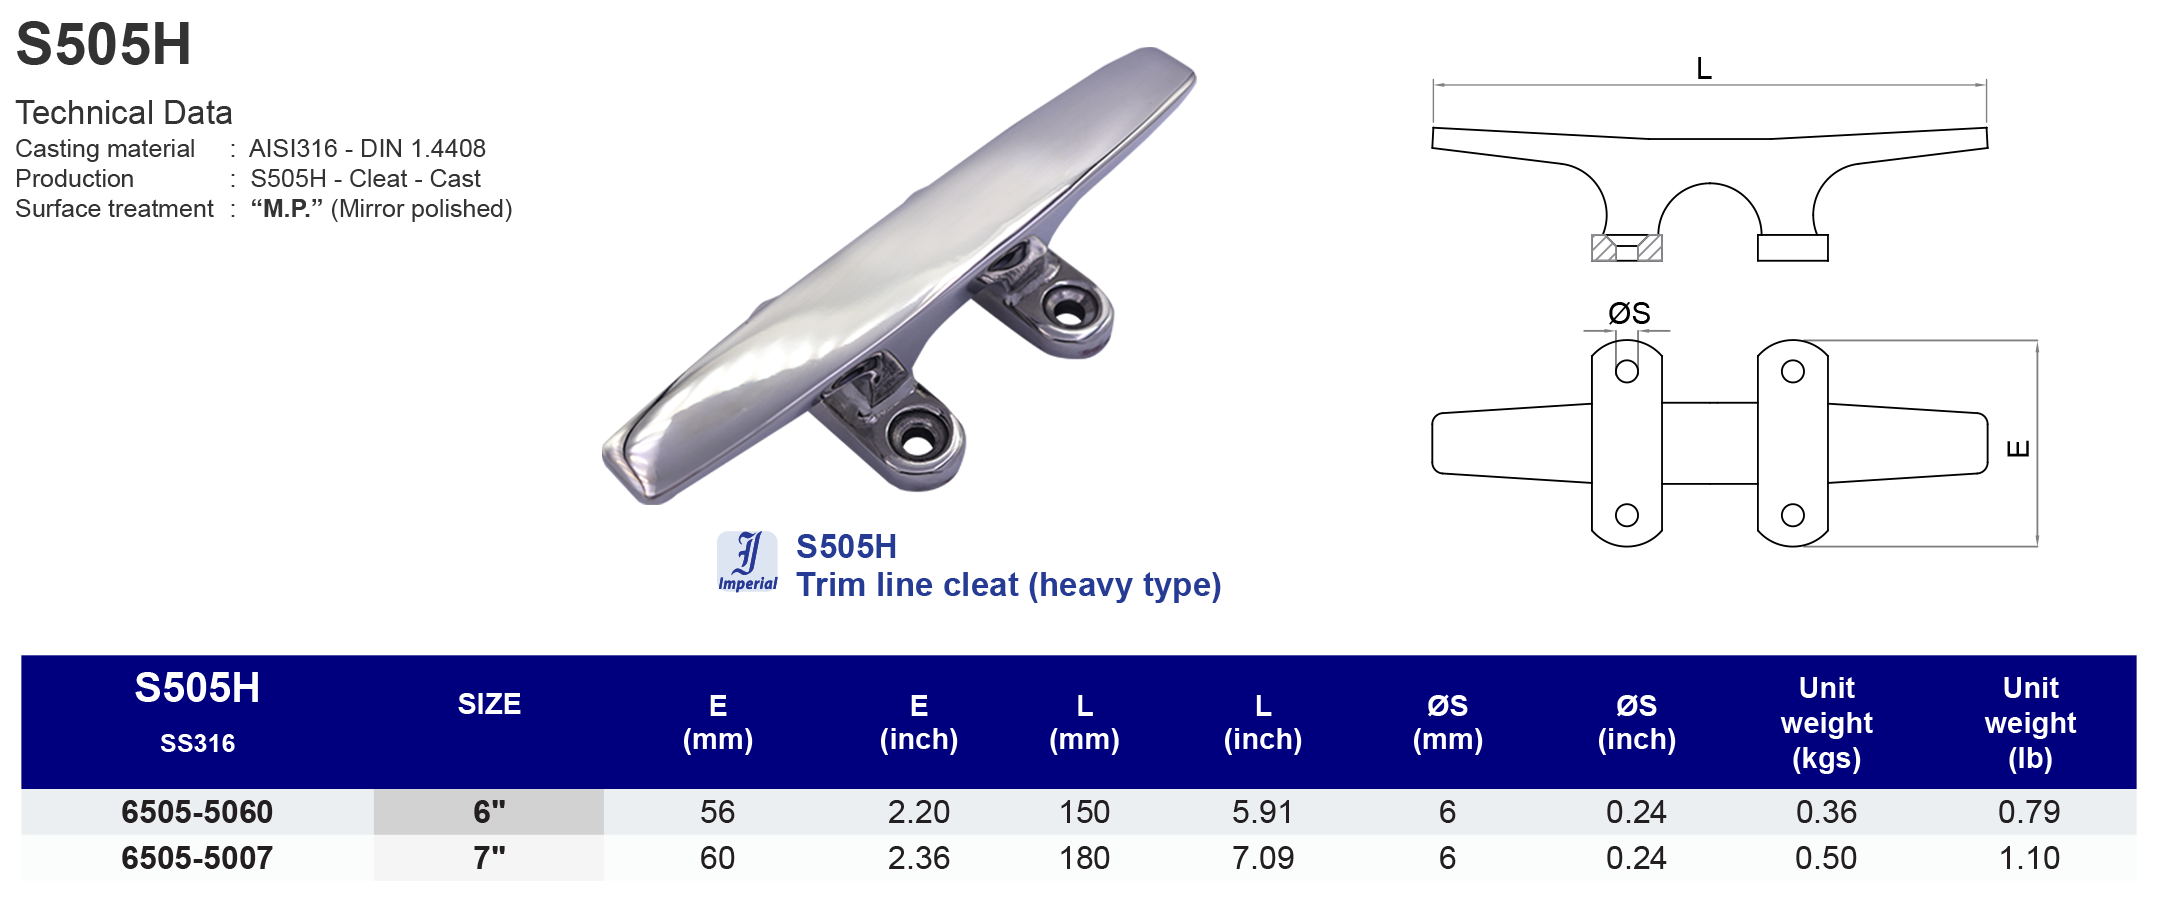 S505H Trim line cleat (heavy type) - 316